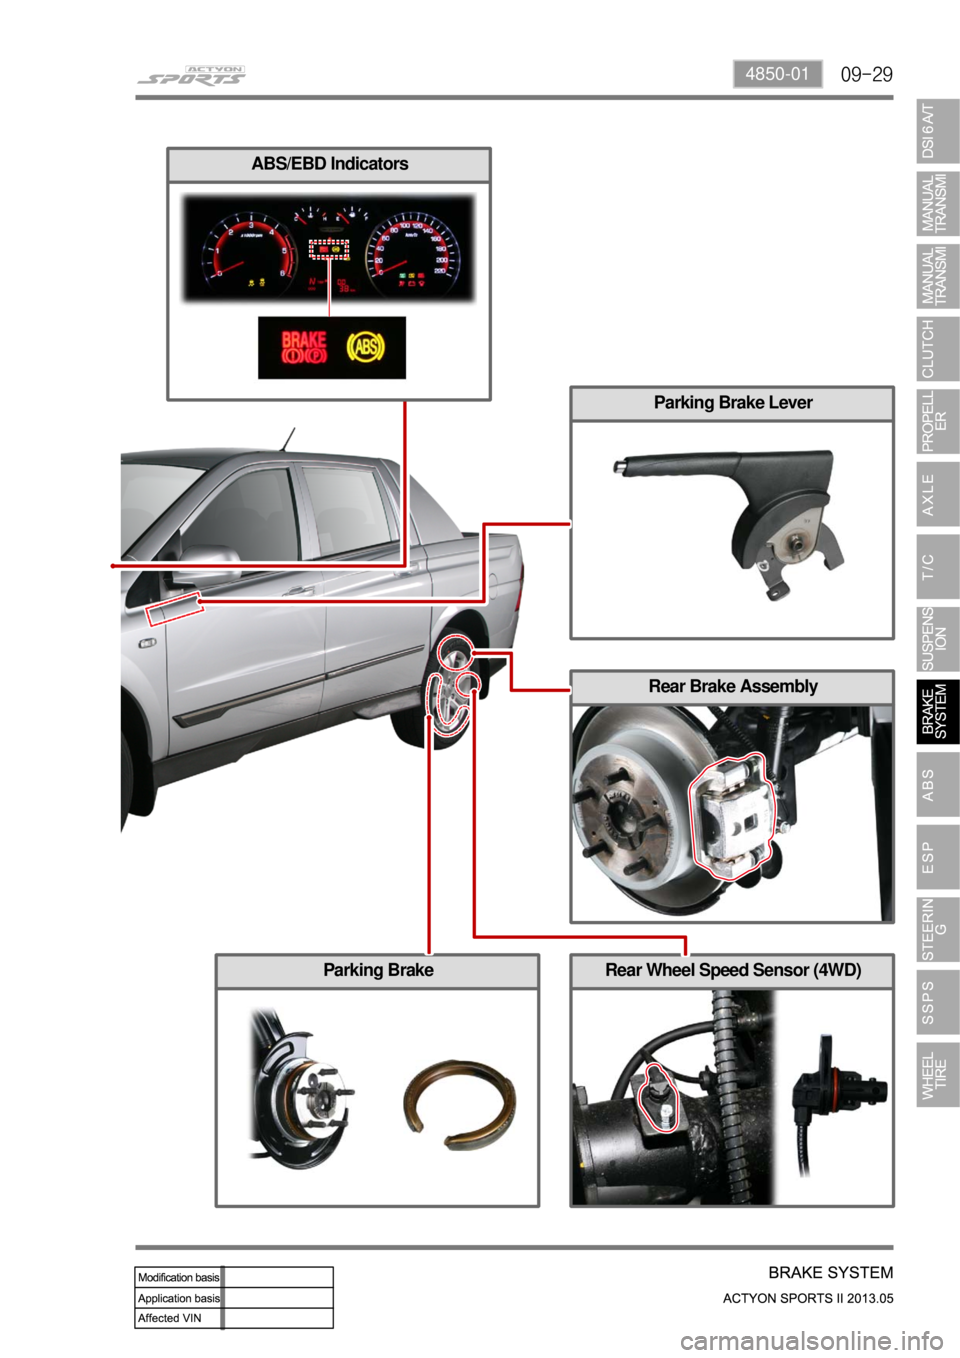 SSANGYONG NEW ACTYON SPORTS 2013 Owners Manual 09-294850-01
Rear Wheel Speed Sensor (4WD)
Rear Brake Assembly
ABS/EBD Indicators
Parking Brake Lever
Parking Brake 